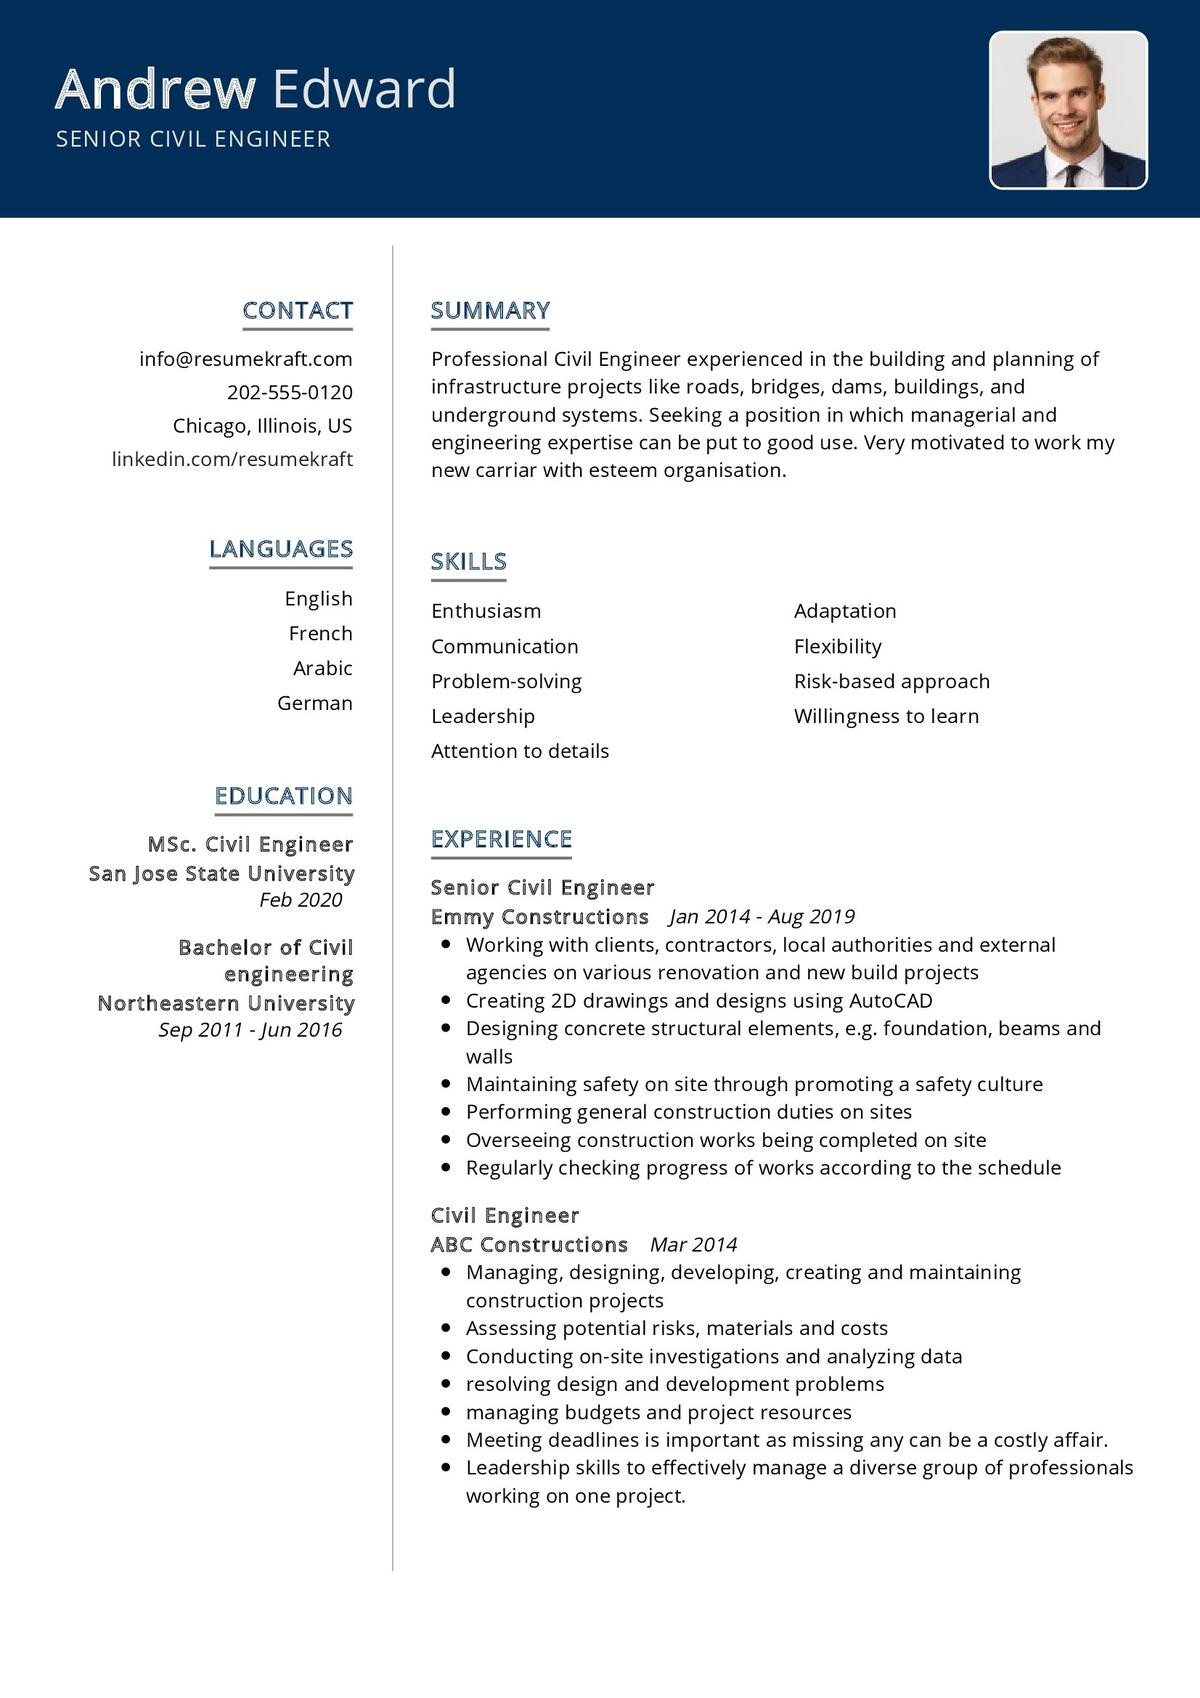 Sample Resume Entry Level Civil Engineer Senior Civil Engineer Resume Sample 2021 Writing Guide – Resumekraft